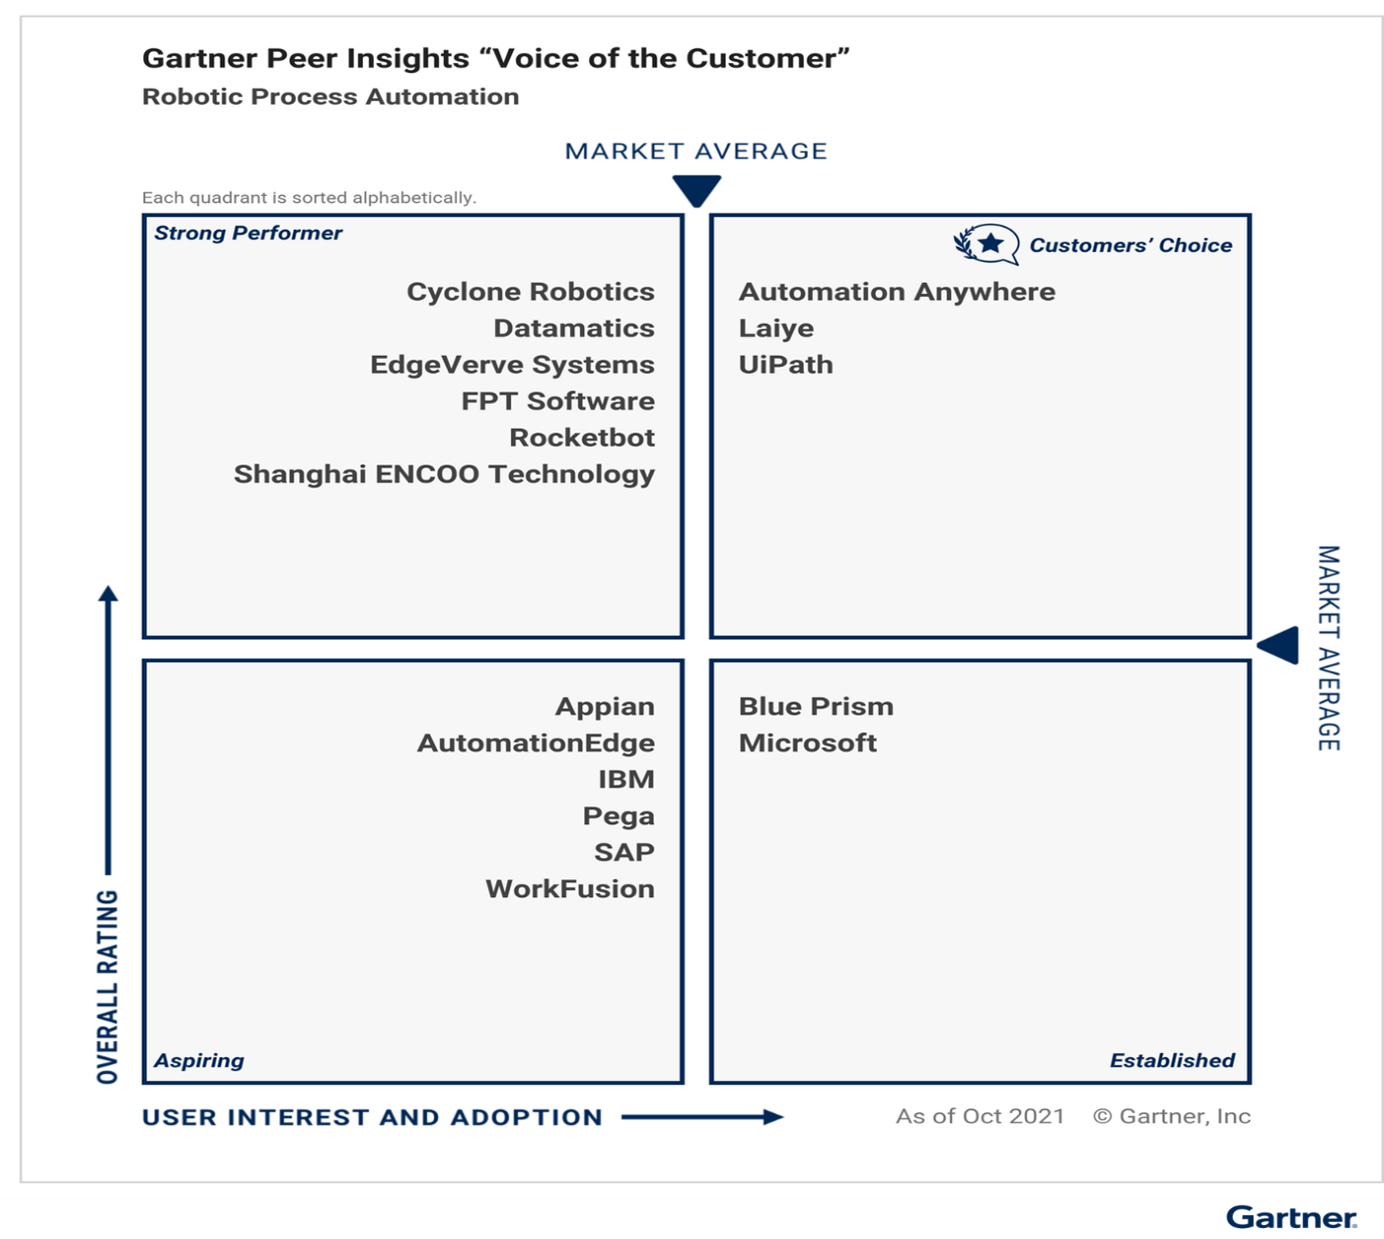 Gartner Peer Insights "Voice of the Customer" for RPA Market